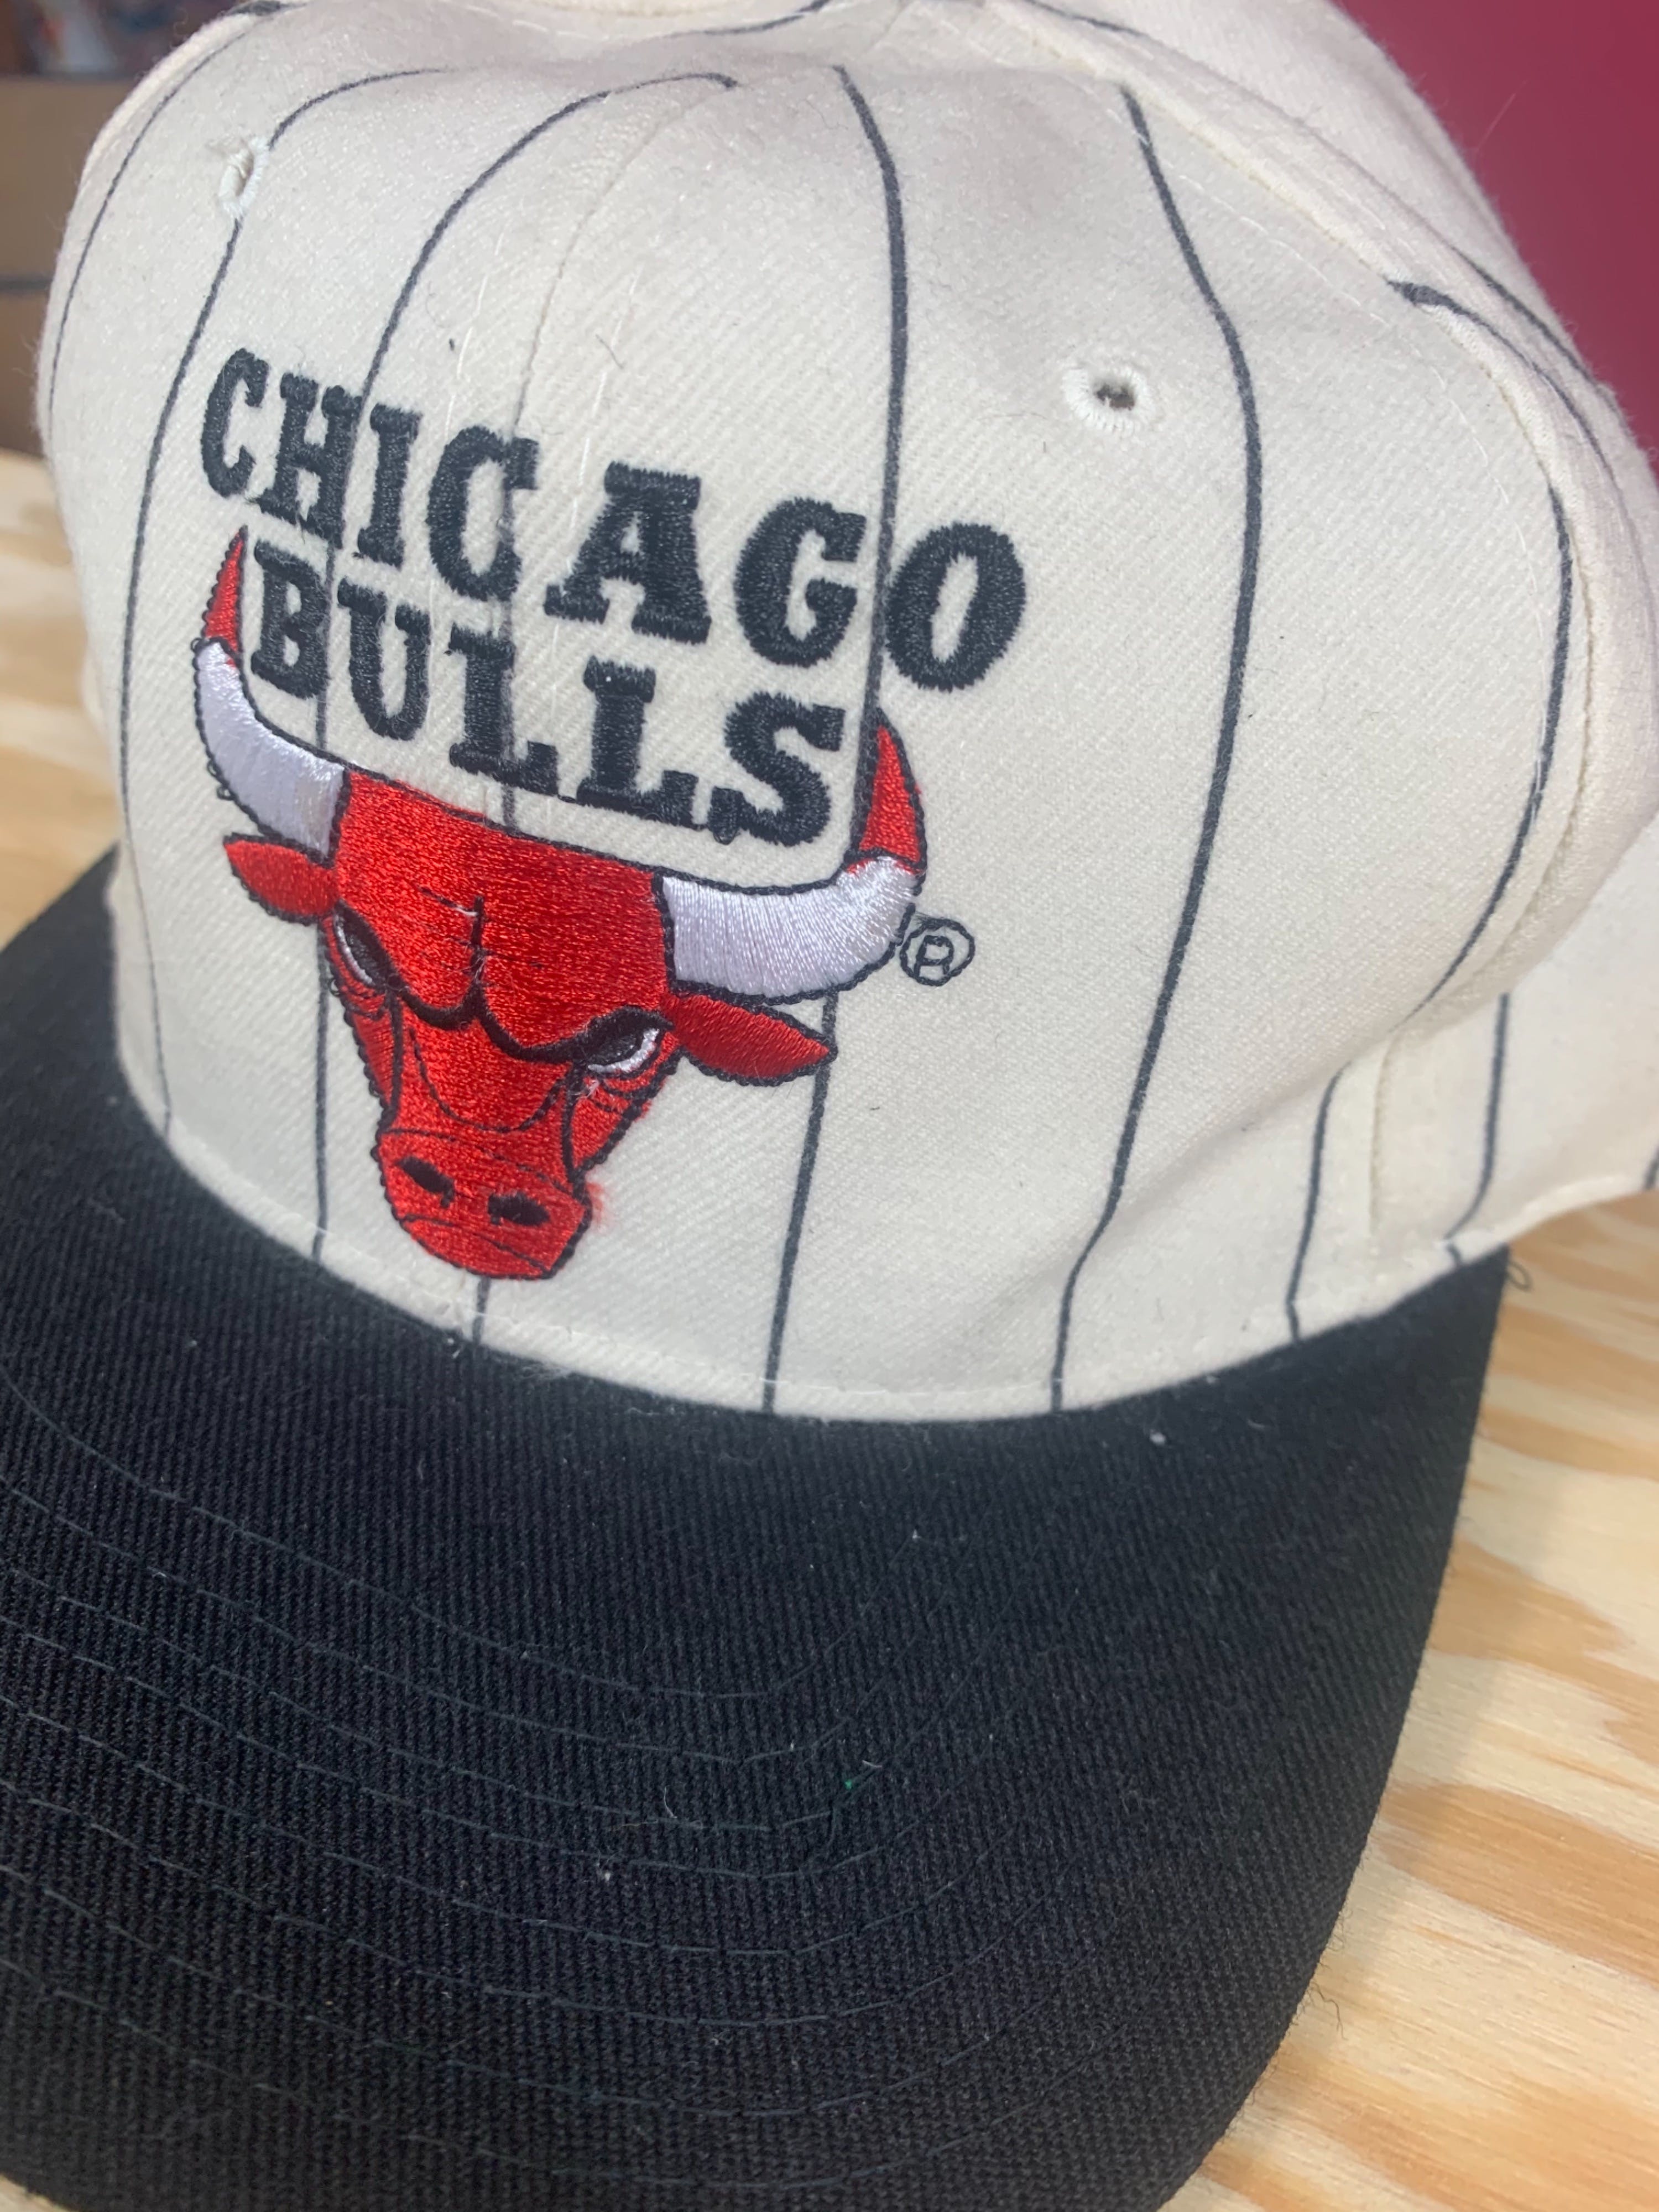 FS: Original 1990 Vintage Chicago Bulls Snapback Hats (Super Rare)